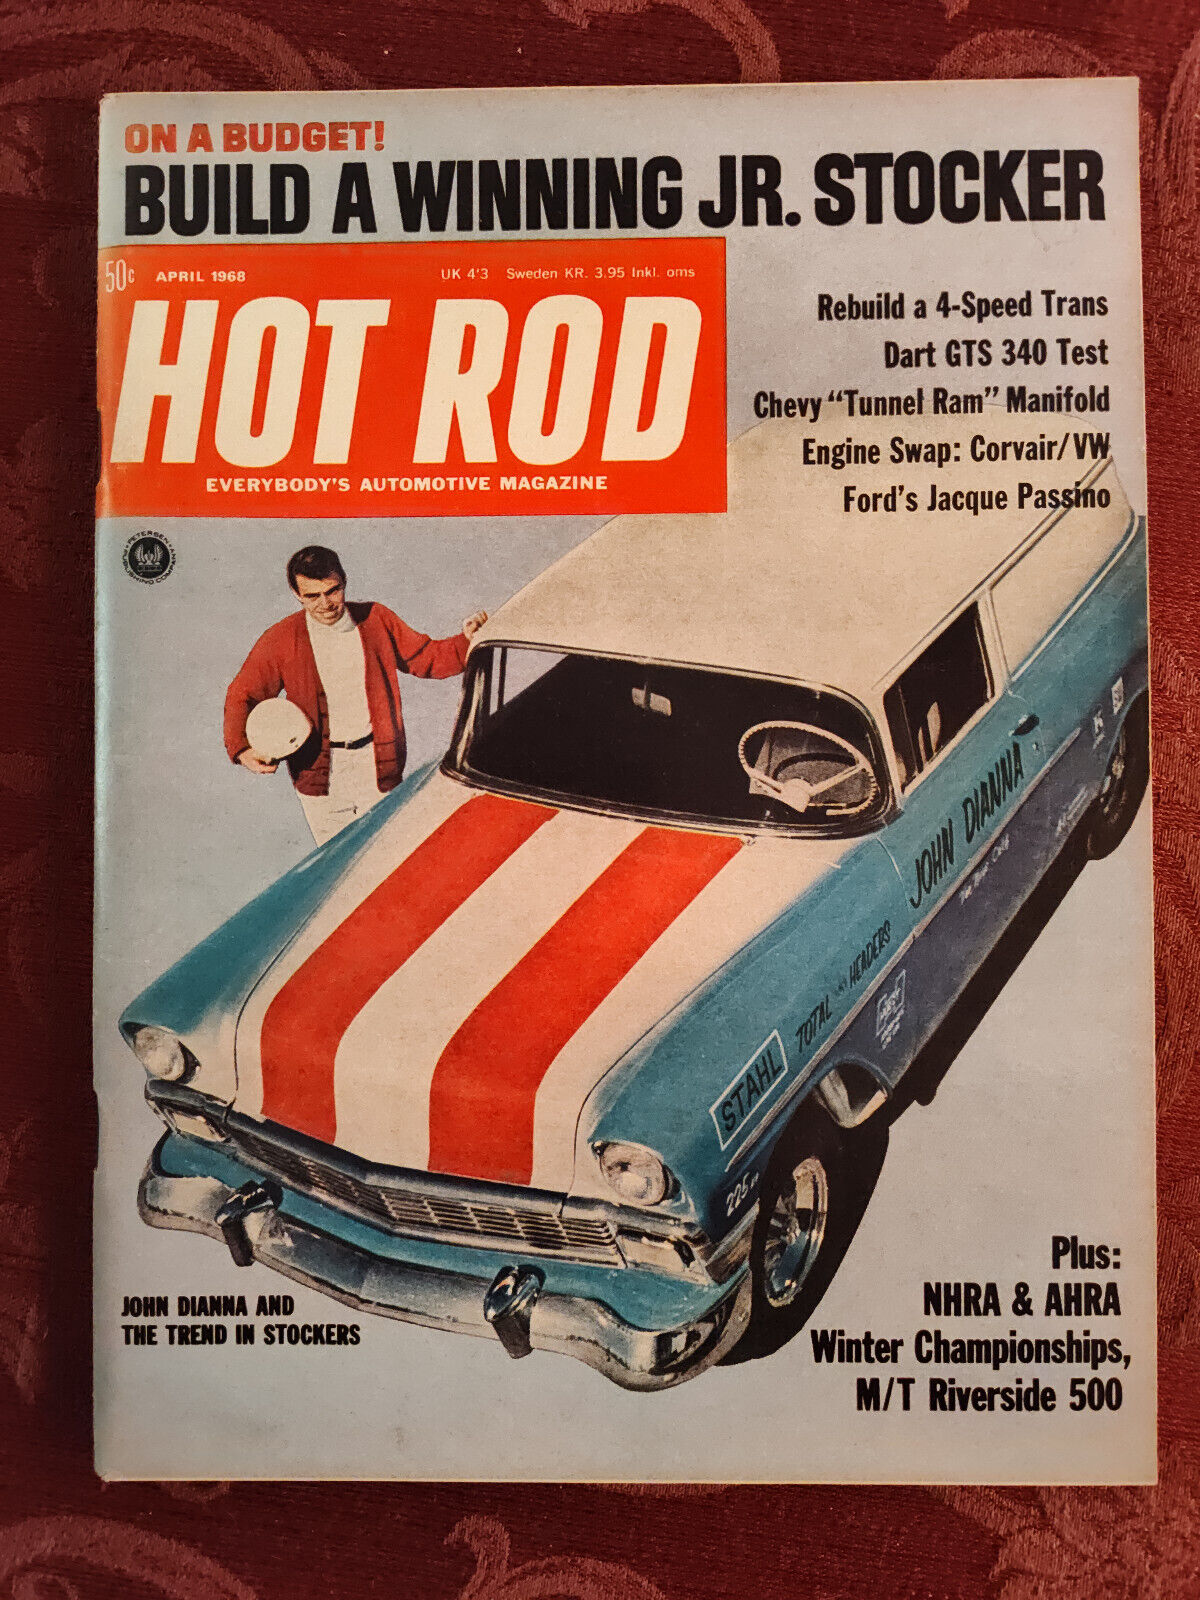 Rare HOT ROD Magazine April 1968 John Dianna Stock Car Jacque Passino Ford